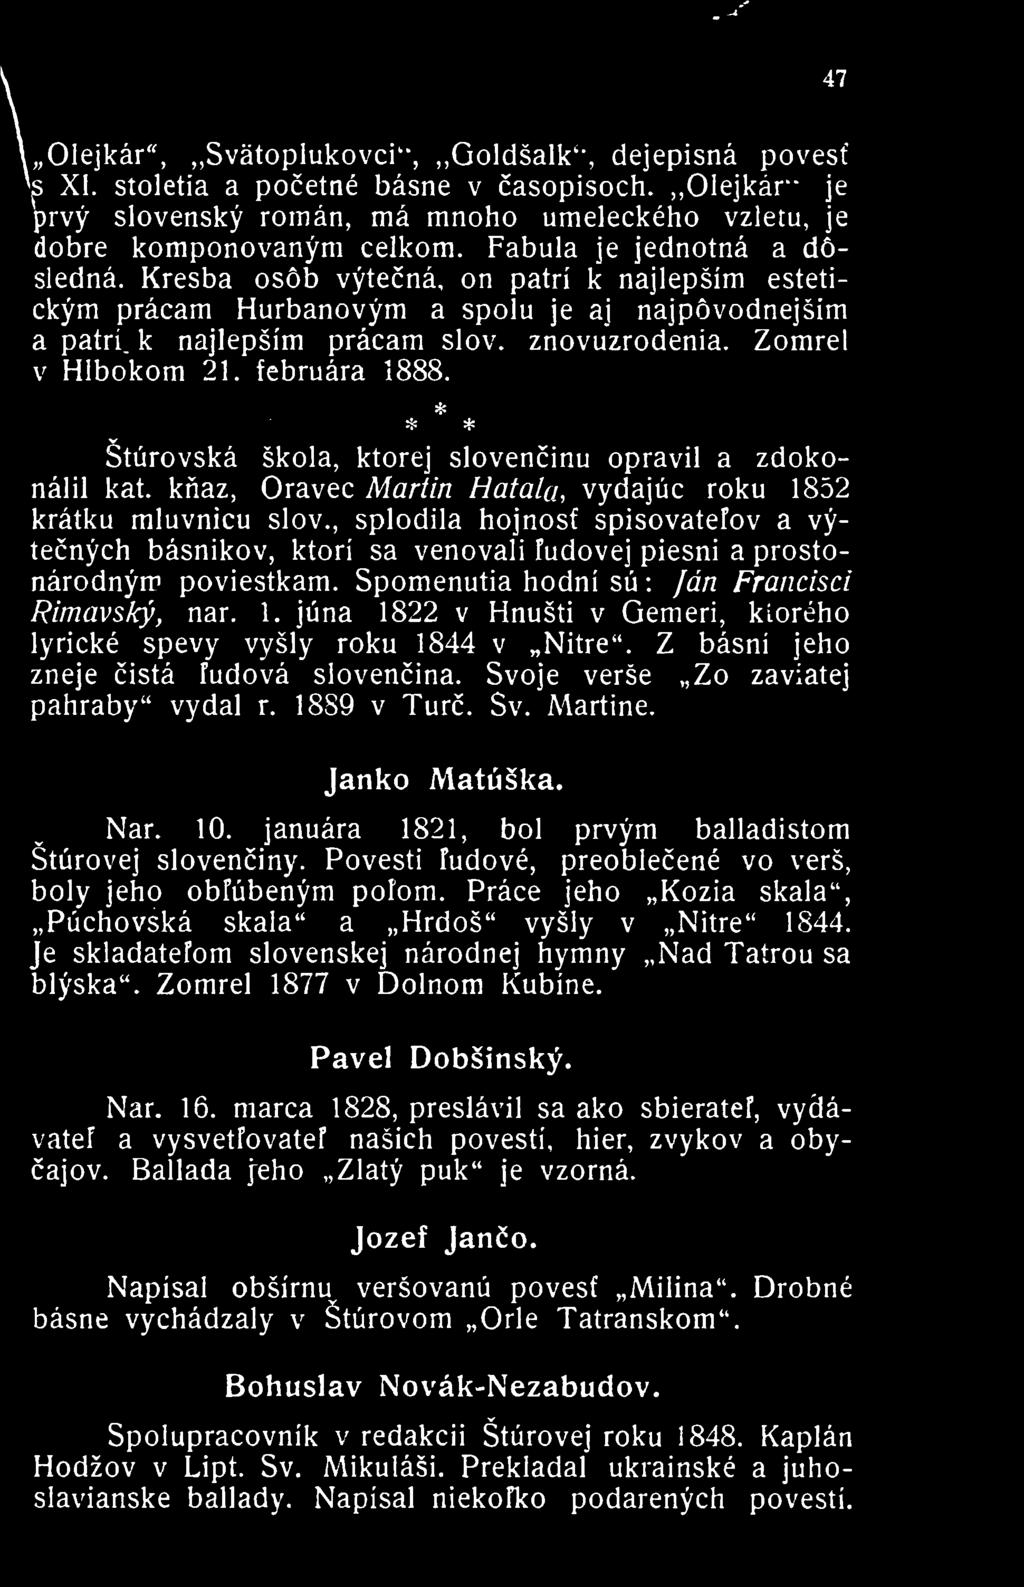 Zomrel V Hlbokom 21. februara 1888. Sturovska skola, ktorej slovencinu opravil a zdokonalil kat. kfiaz, Oravec Martin HataUi, vydajiic roku 1852 kratku mluvnicu slov.